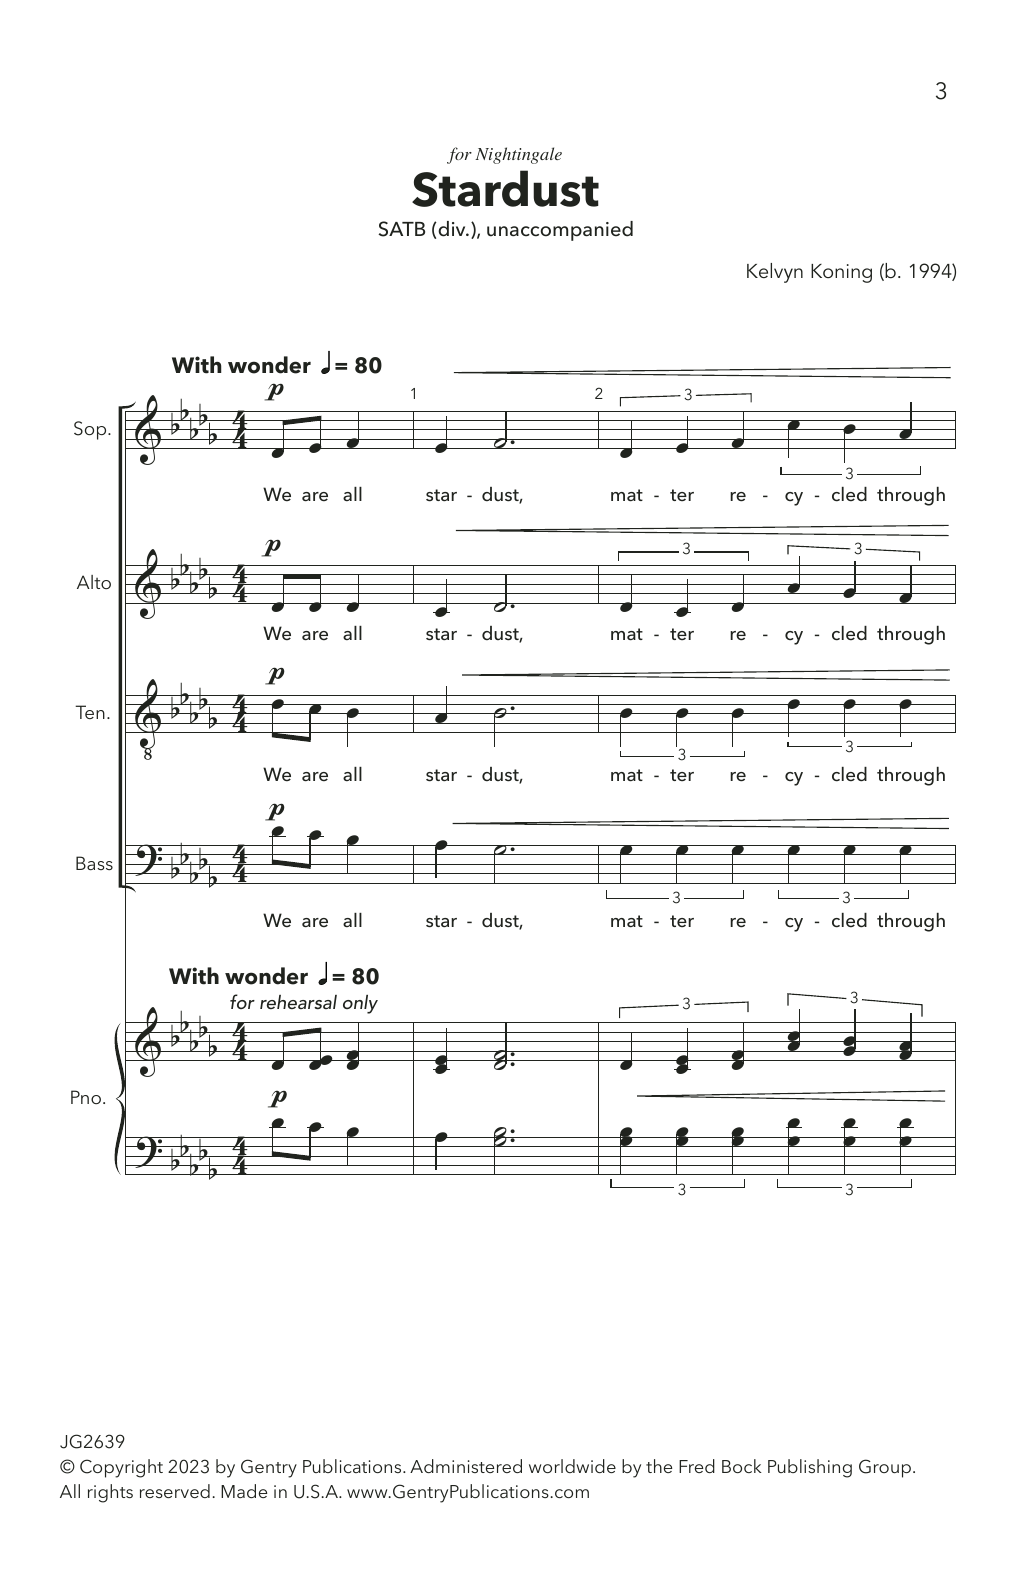 Kelvyn Koning Stardust Sheet Music Notes & Chords for SATB Choir - Download or Print PDF